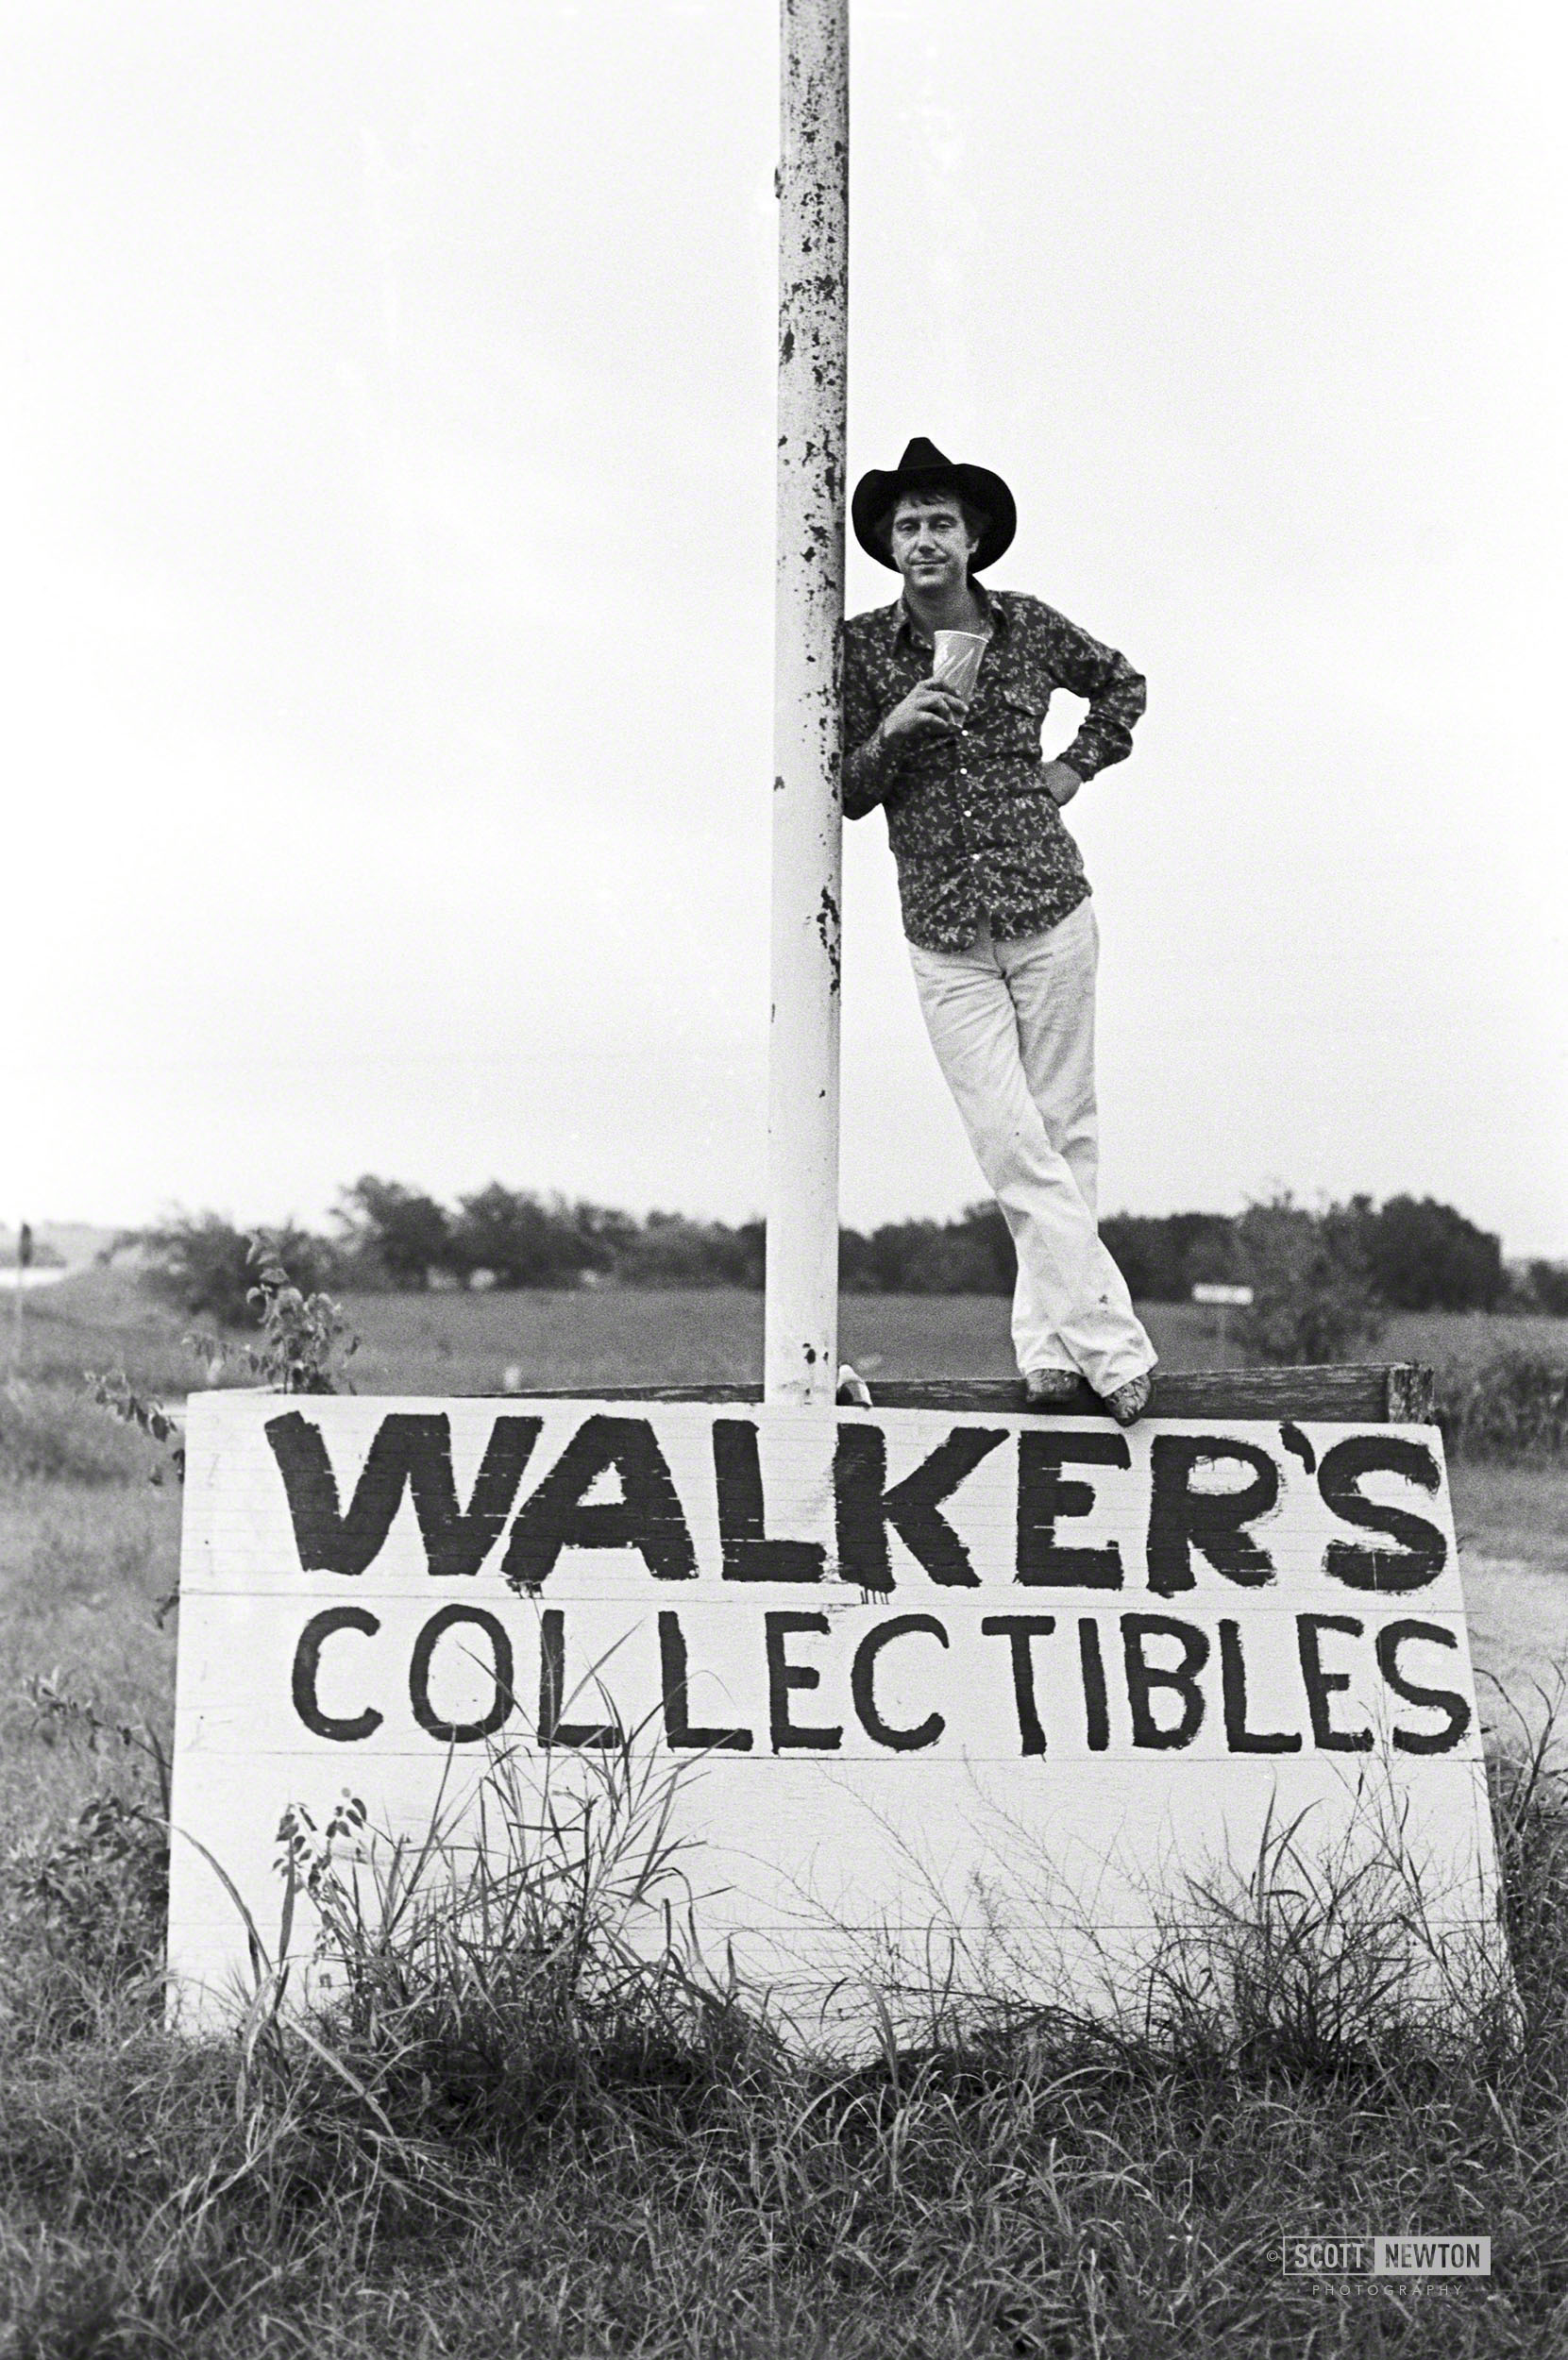 Jerry Jeff Walker @ 10 miles east of Austin on Hwy. 290 1974